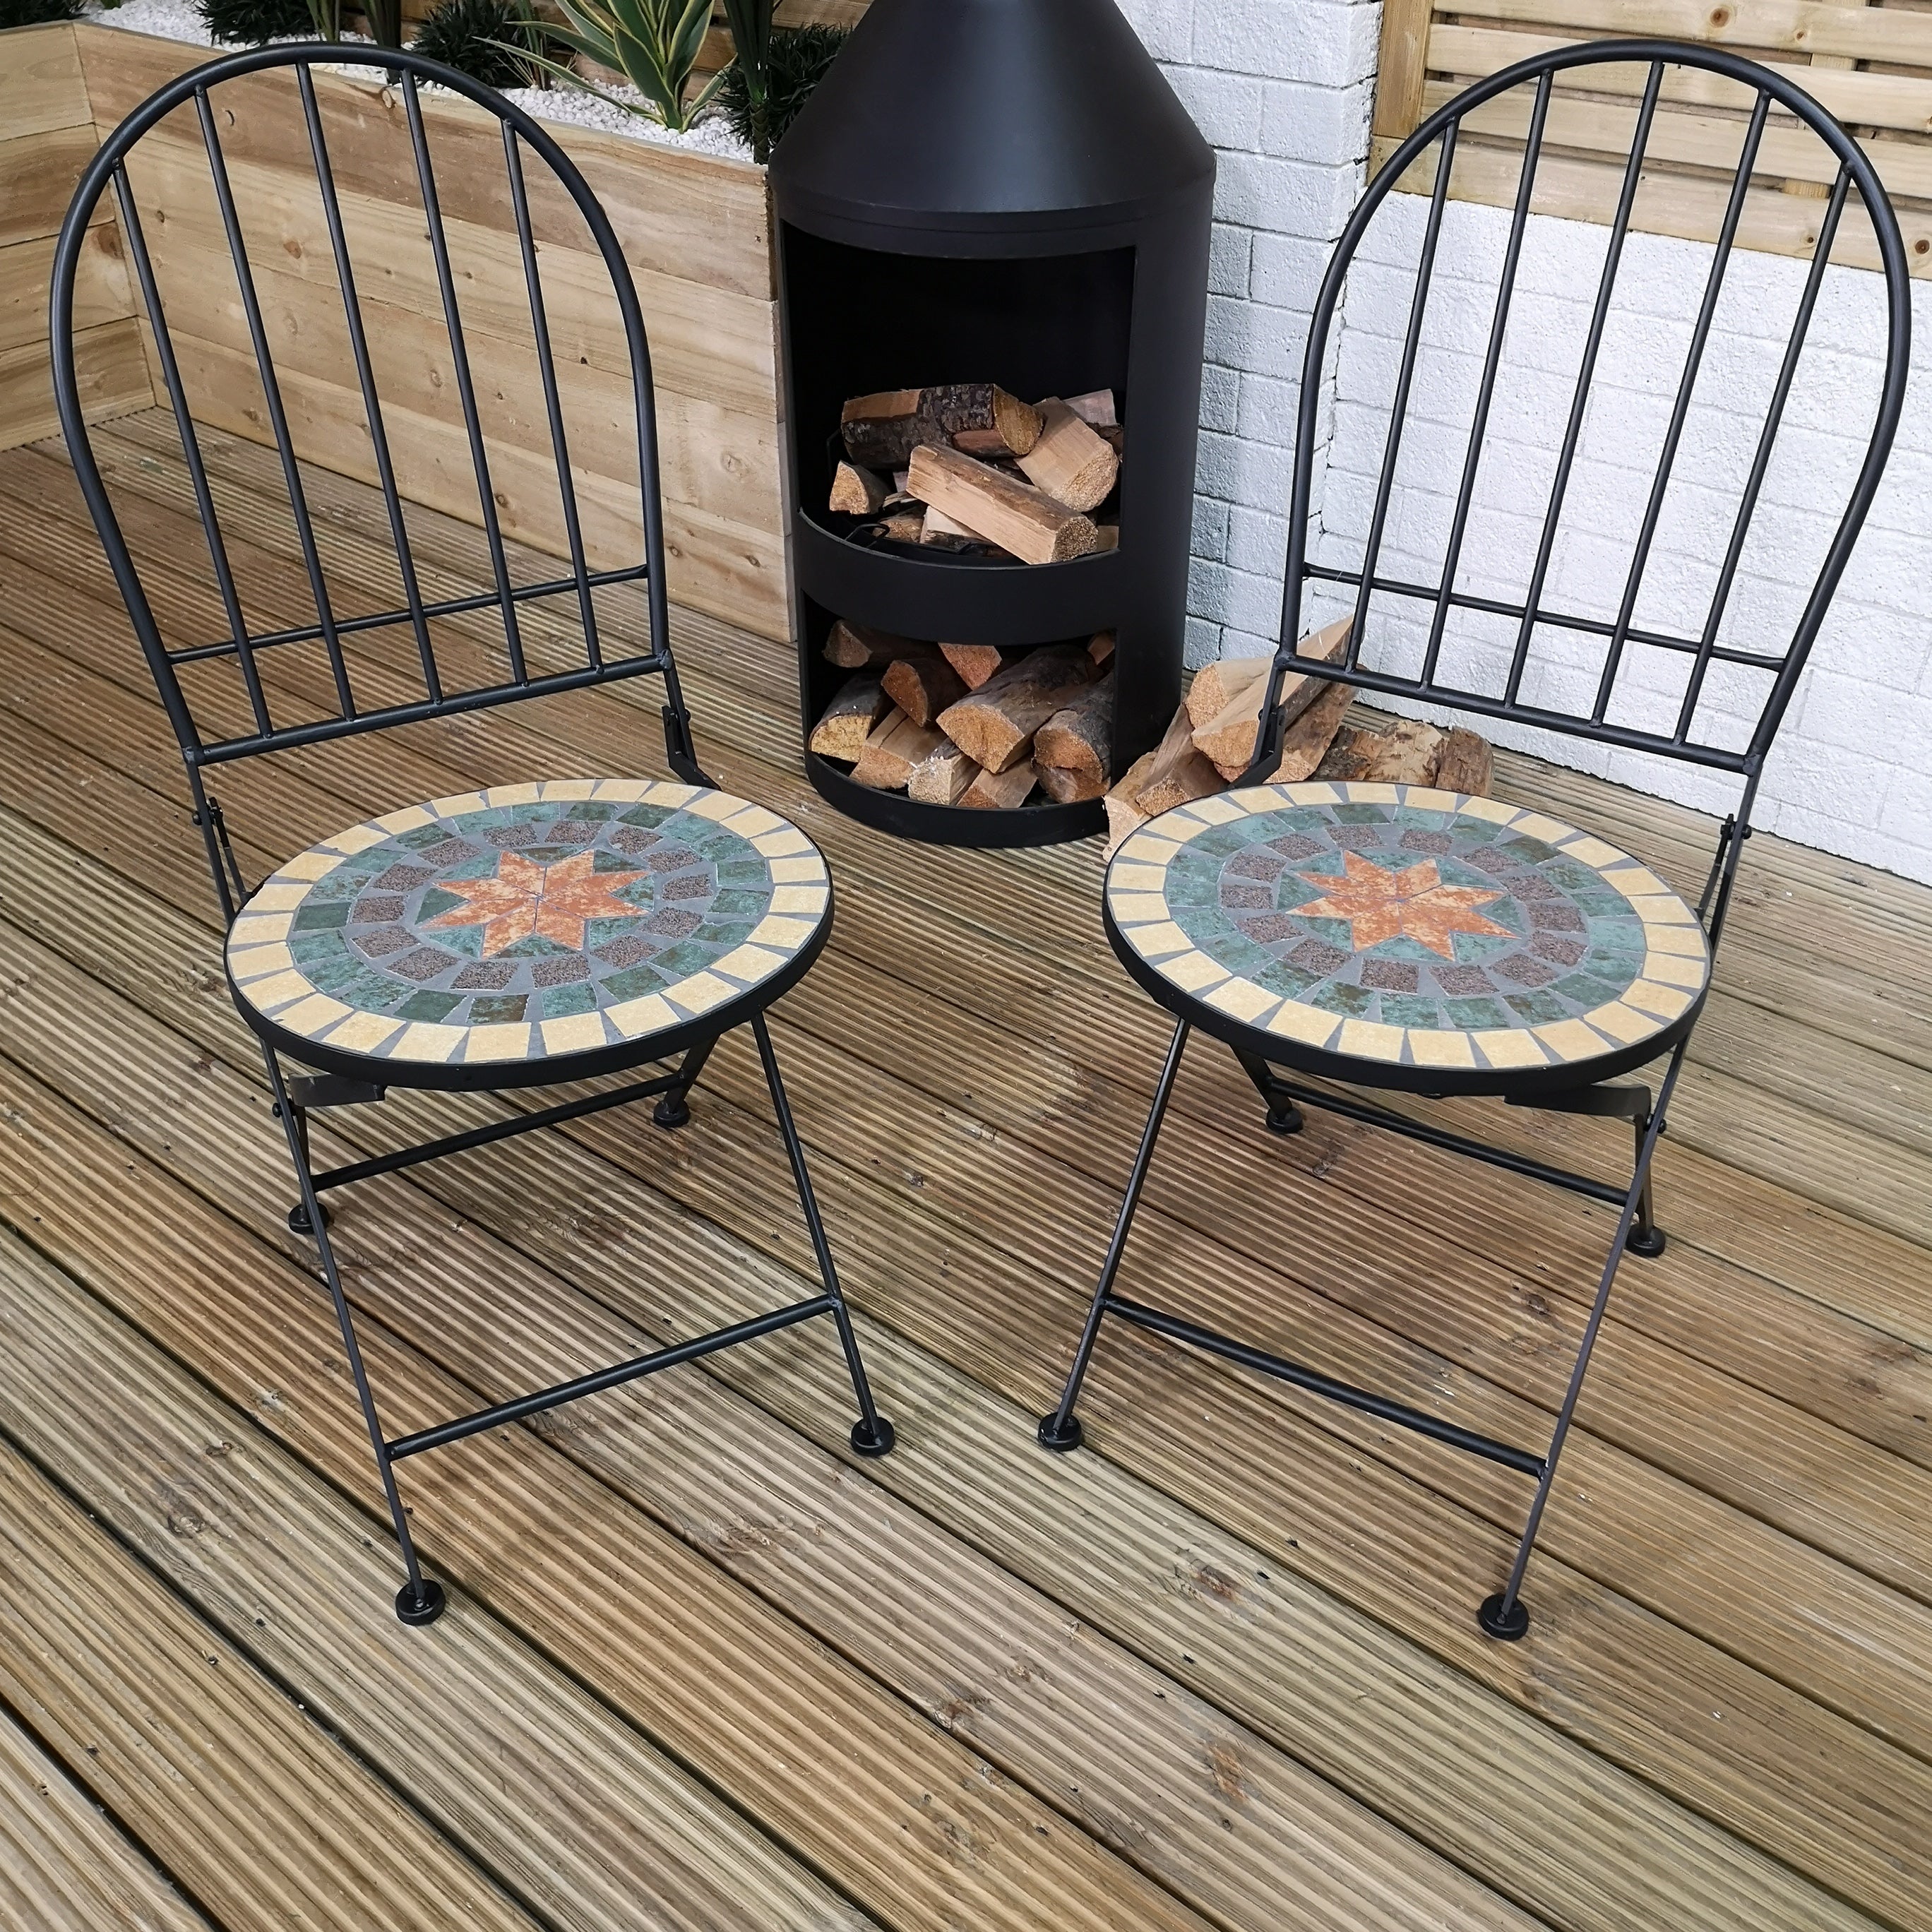 Set of 2 Outdoor Black Metal Bistro Chairs for Garden Patio Balcony